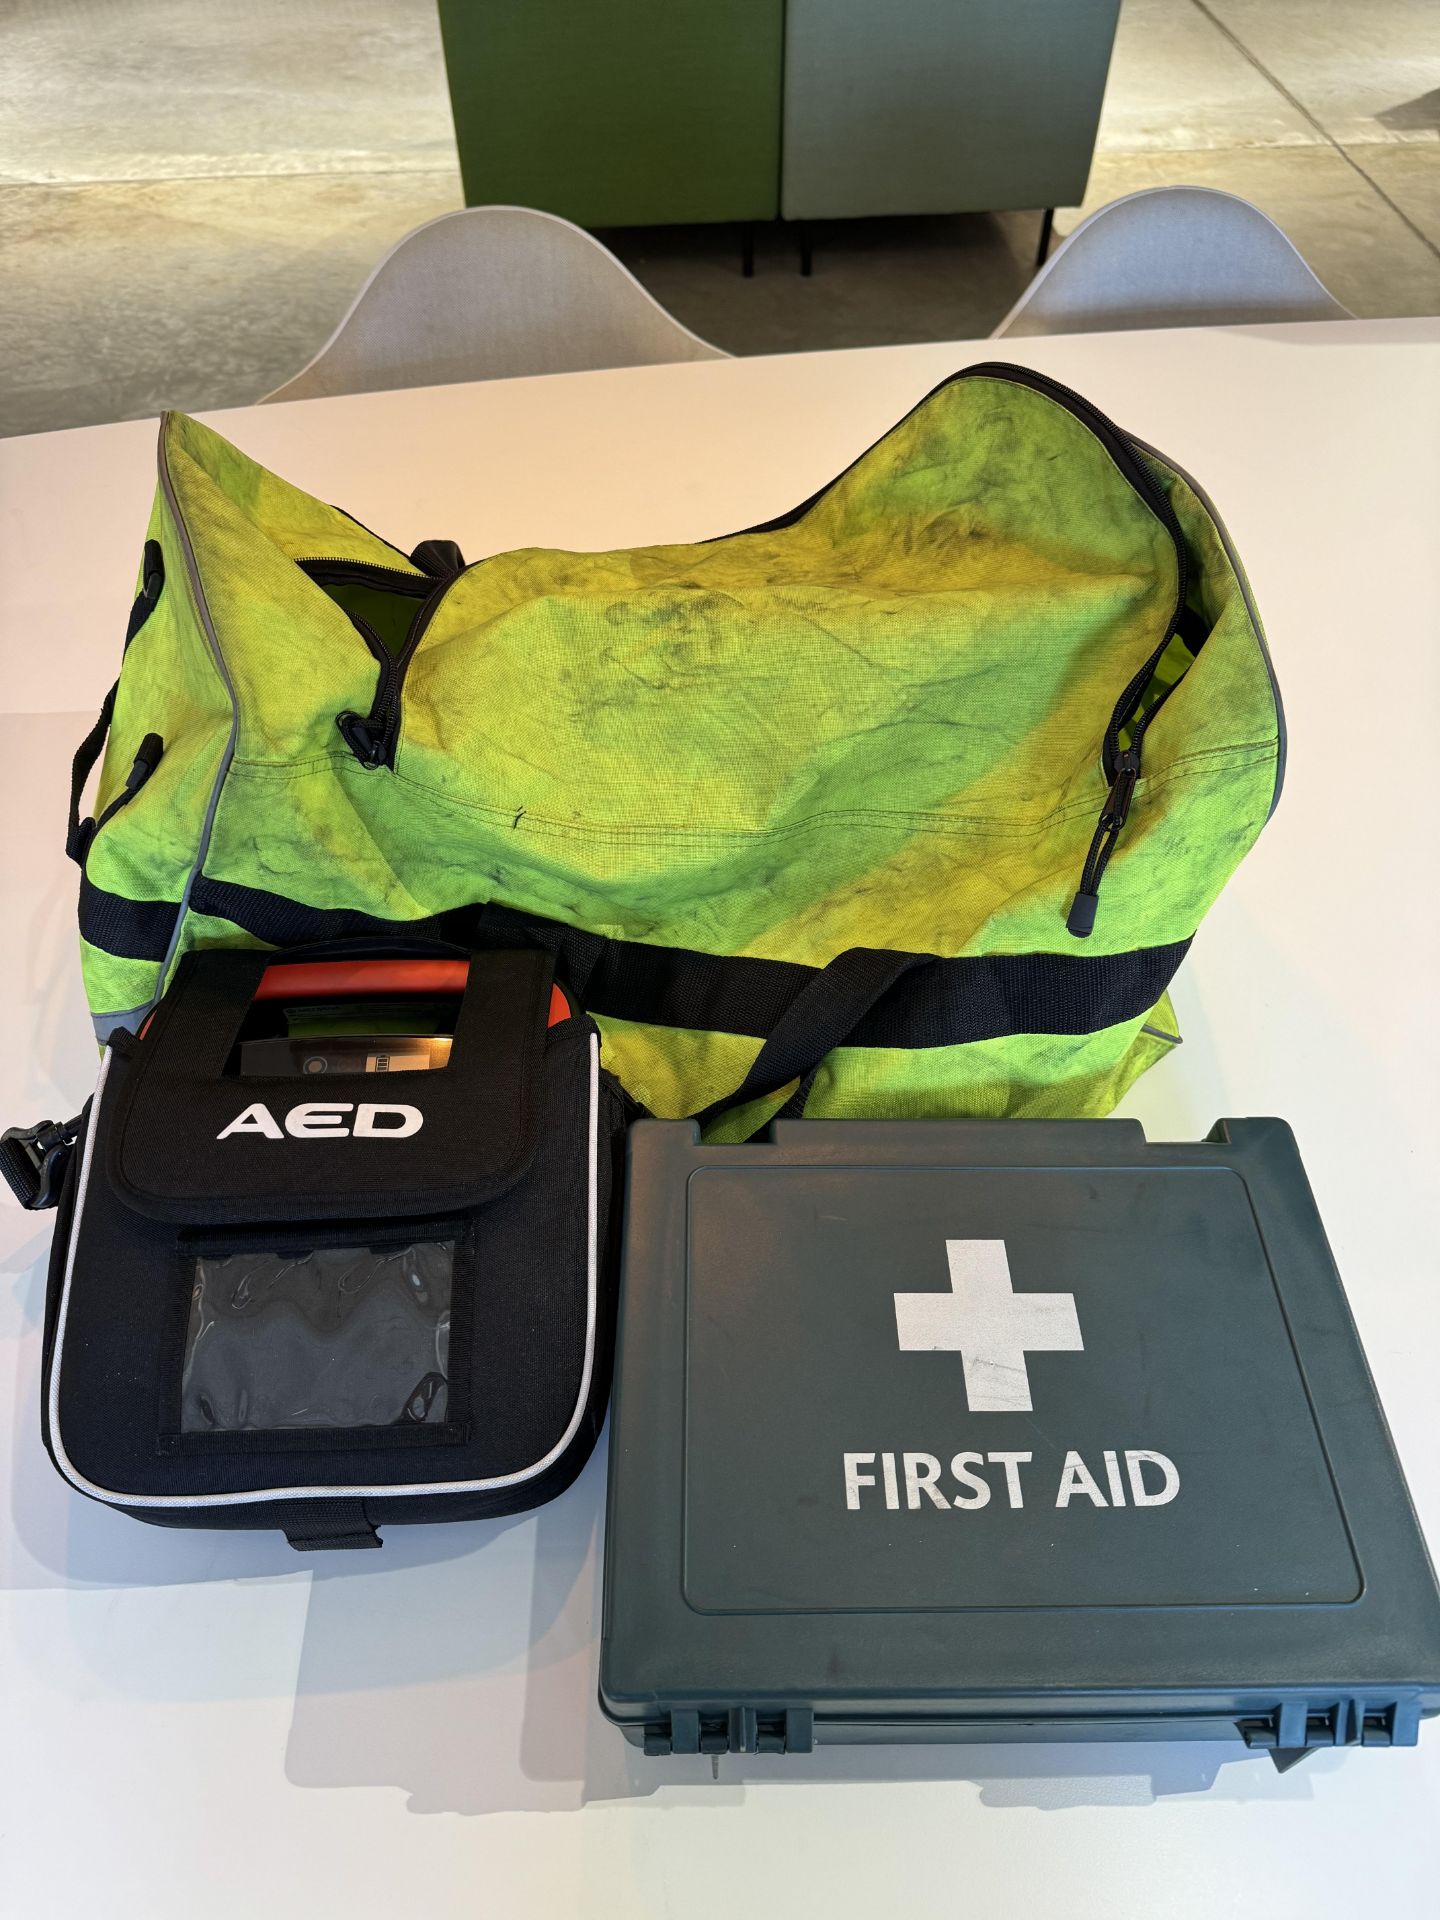 Defibrillator & First Aid Kit